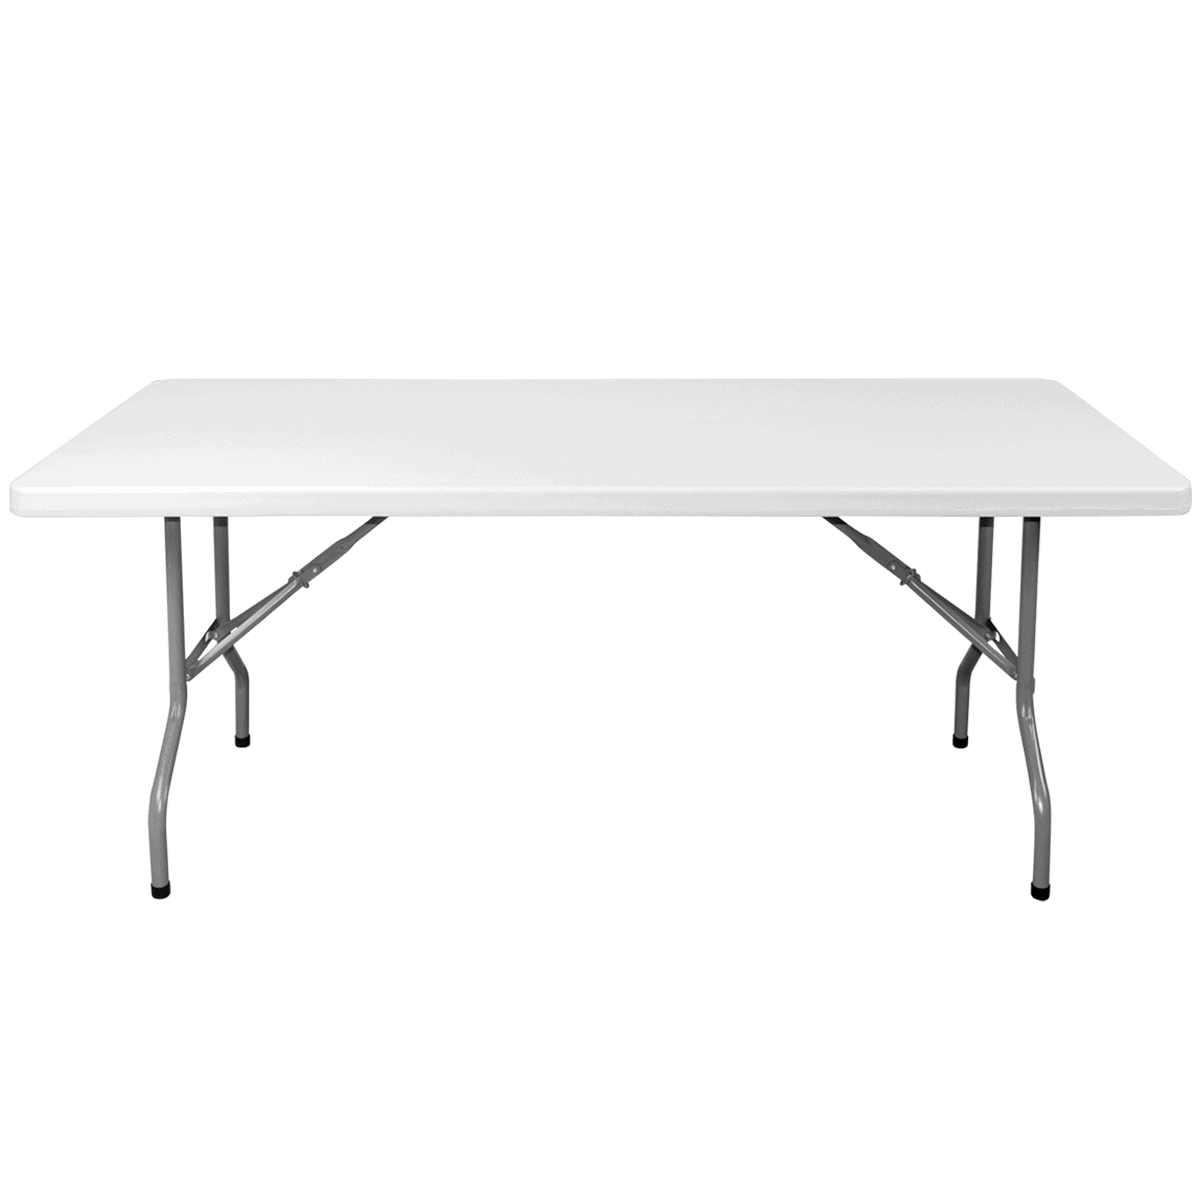 Mesa plegable rectangular 2 secciones 2.44x76 plastico blanco